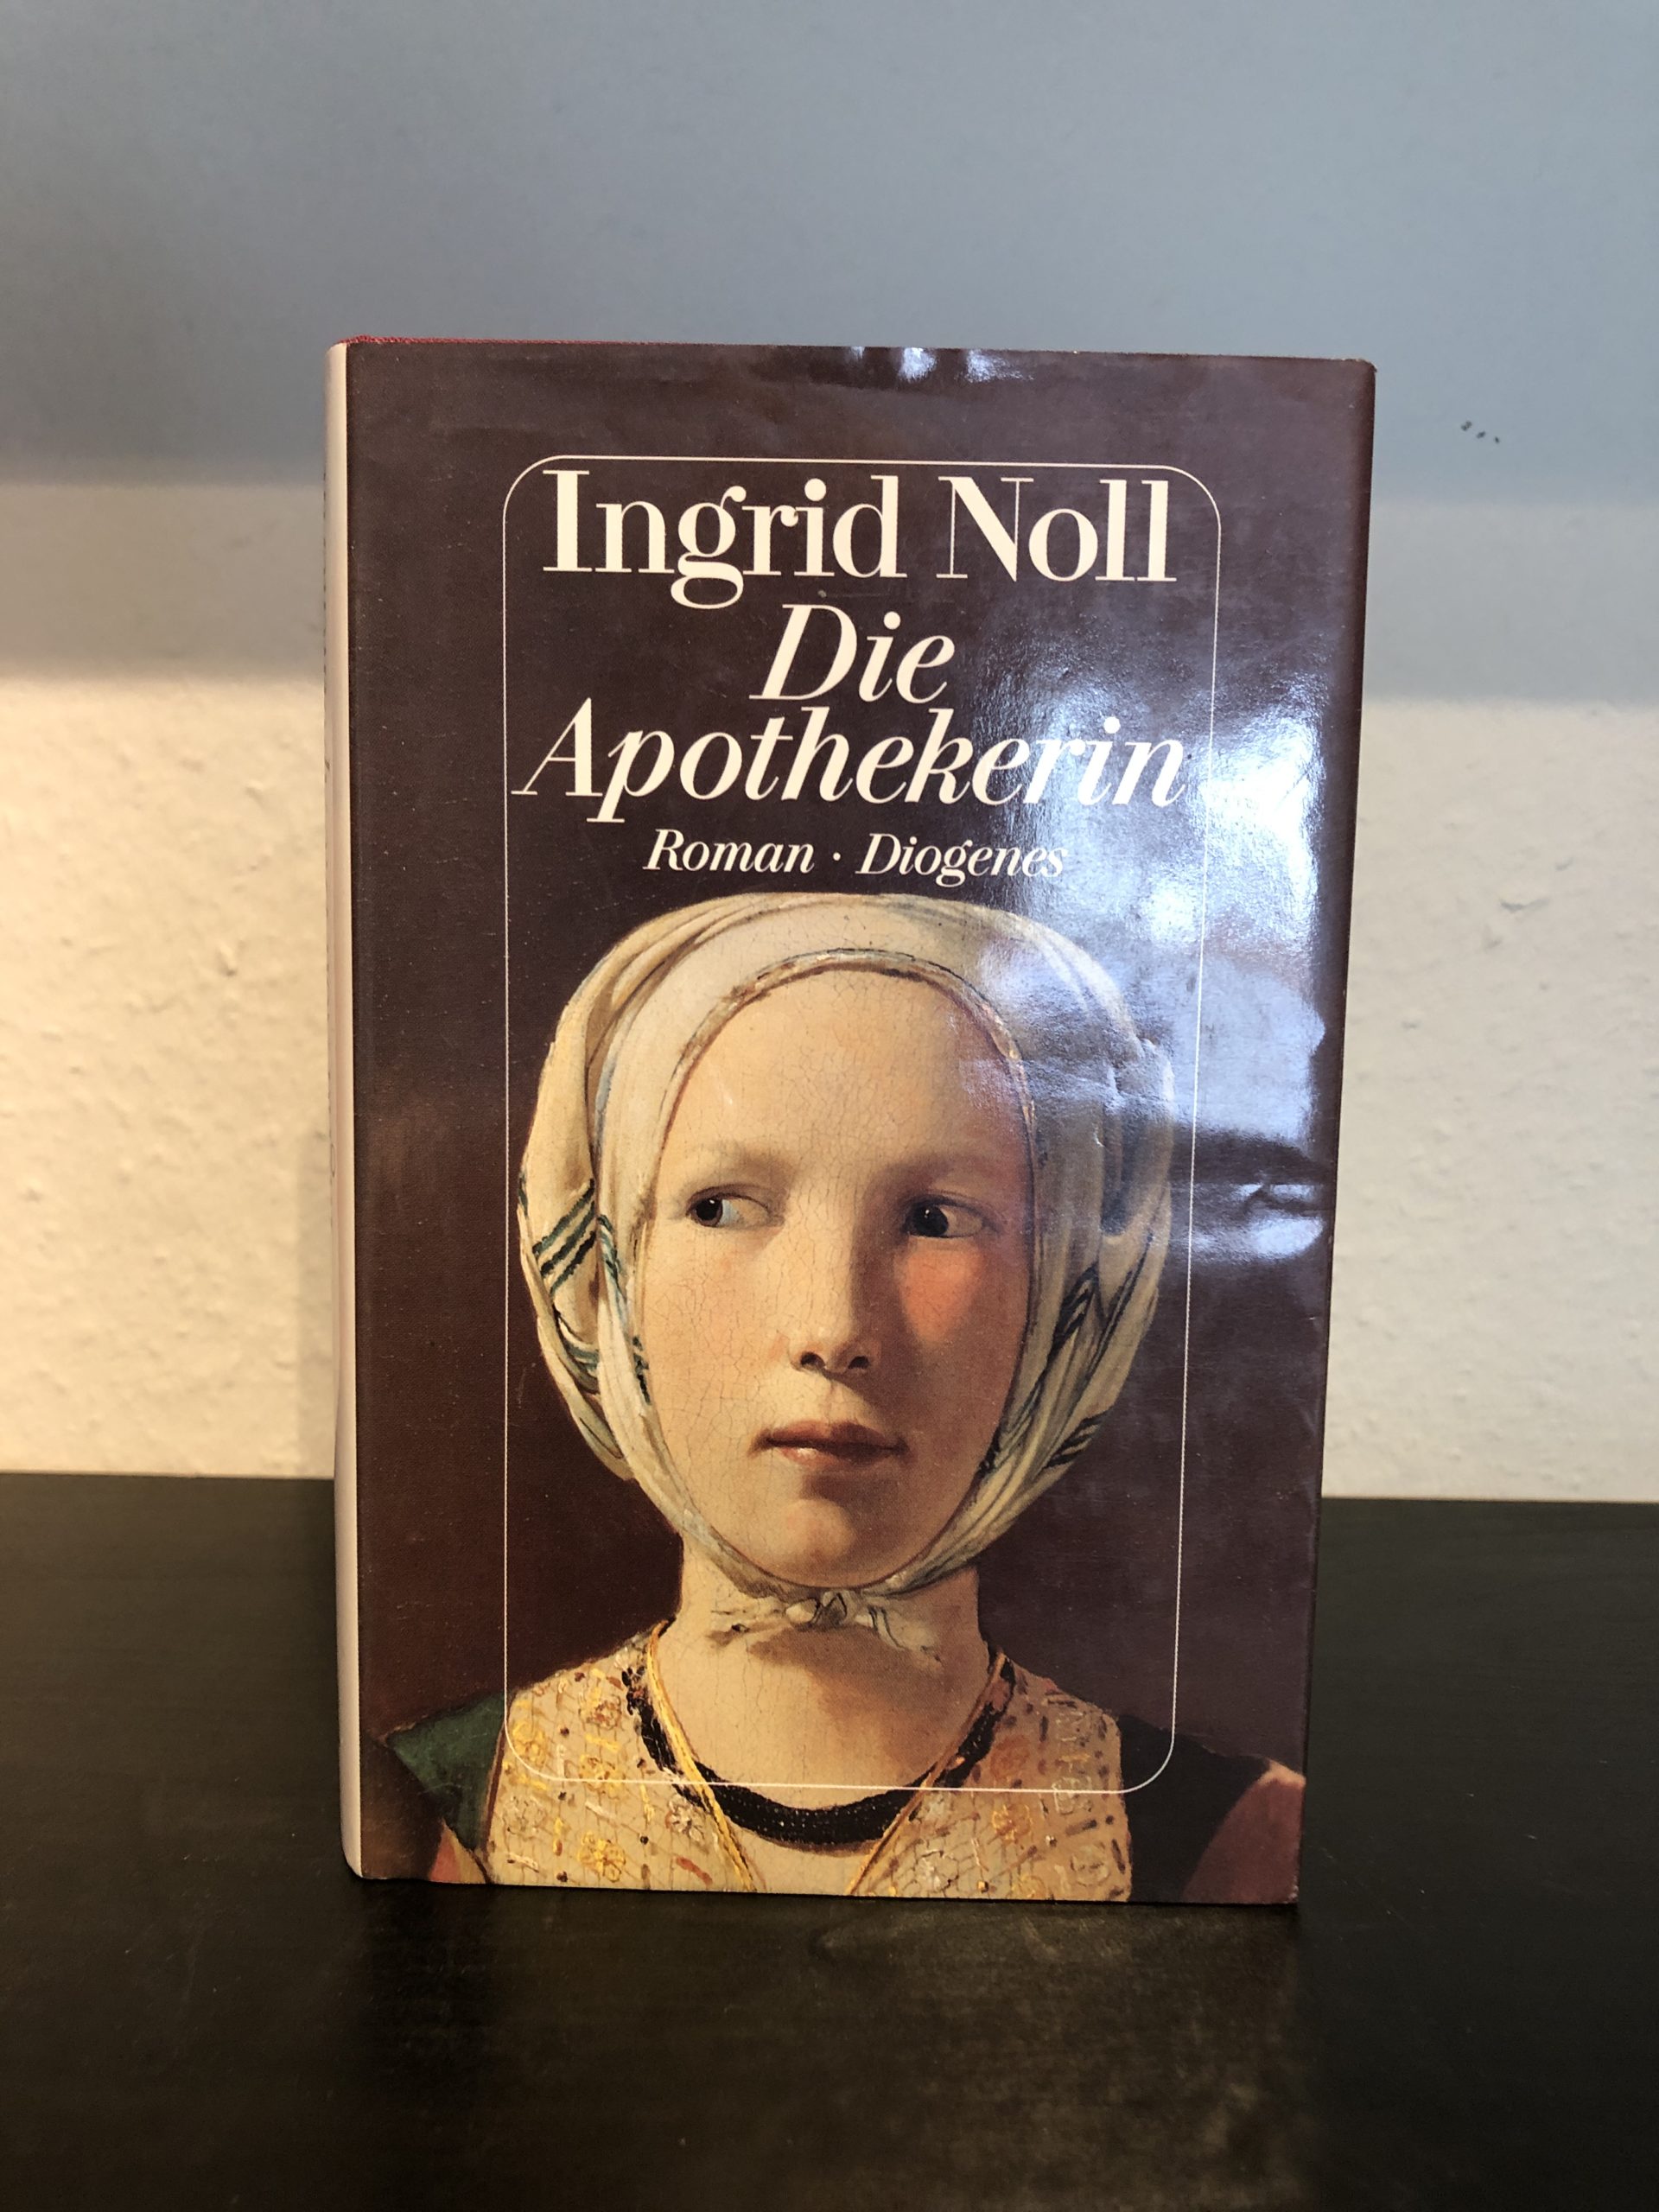 Die Apothekerin - Ingrid Noll